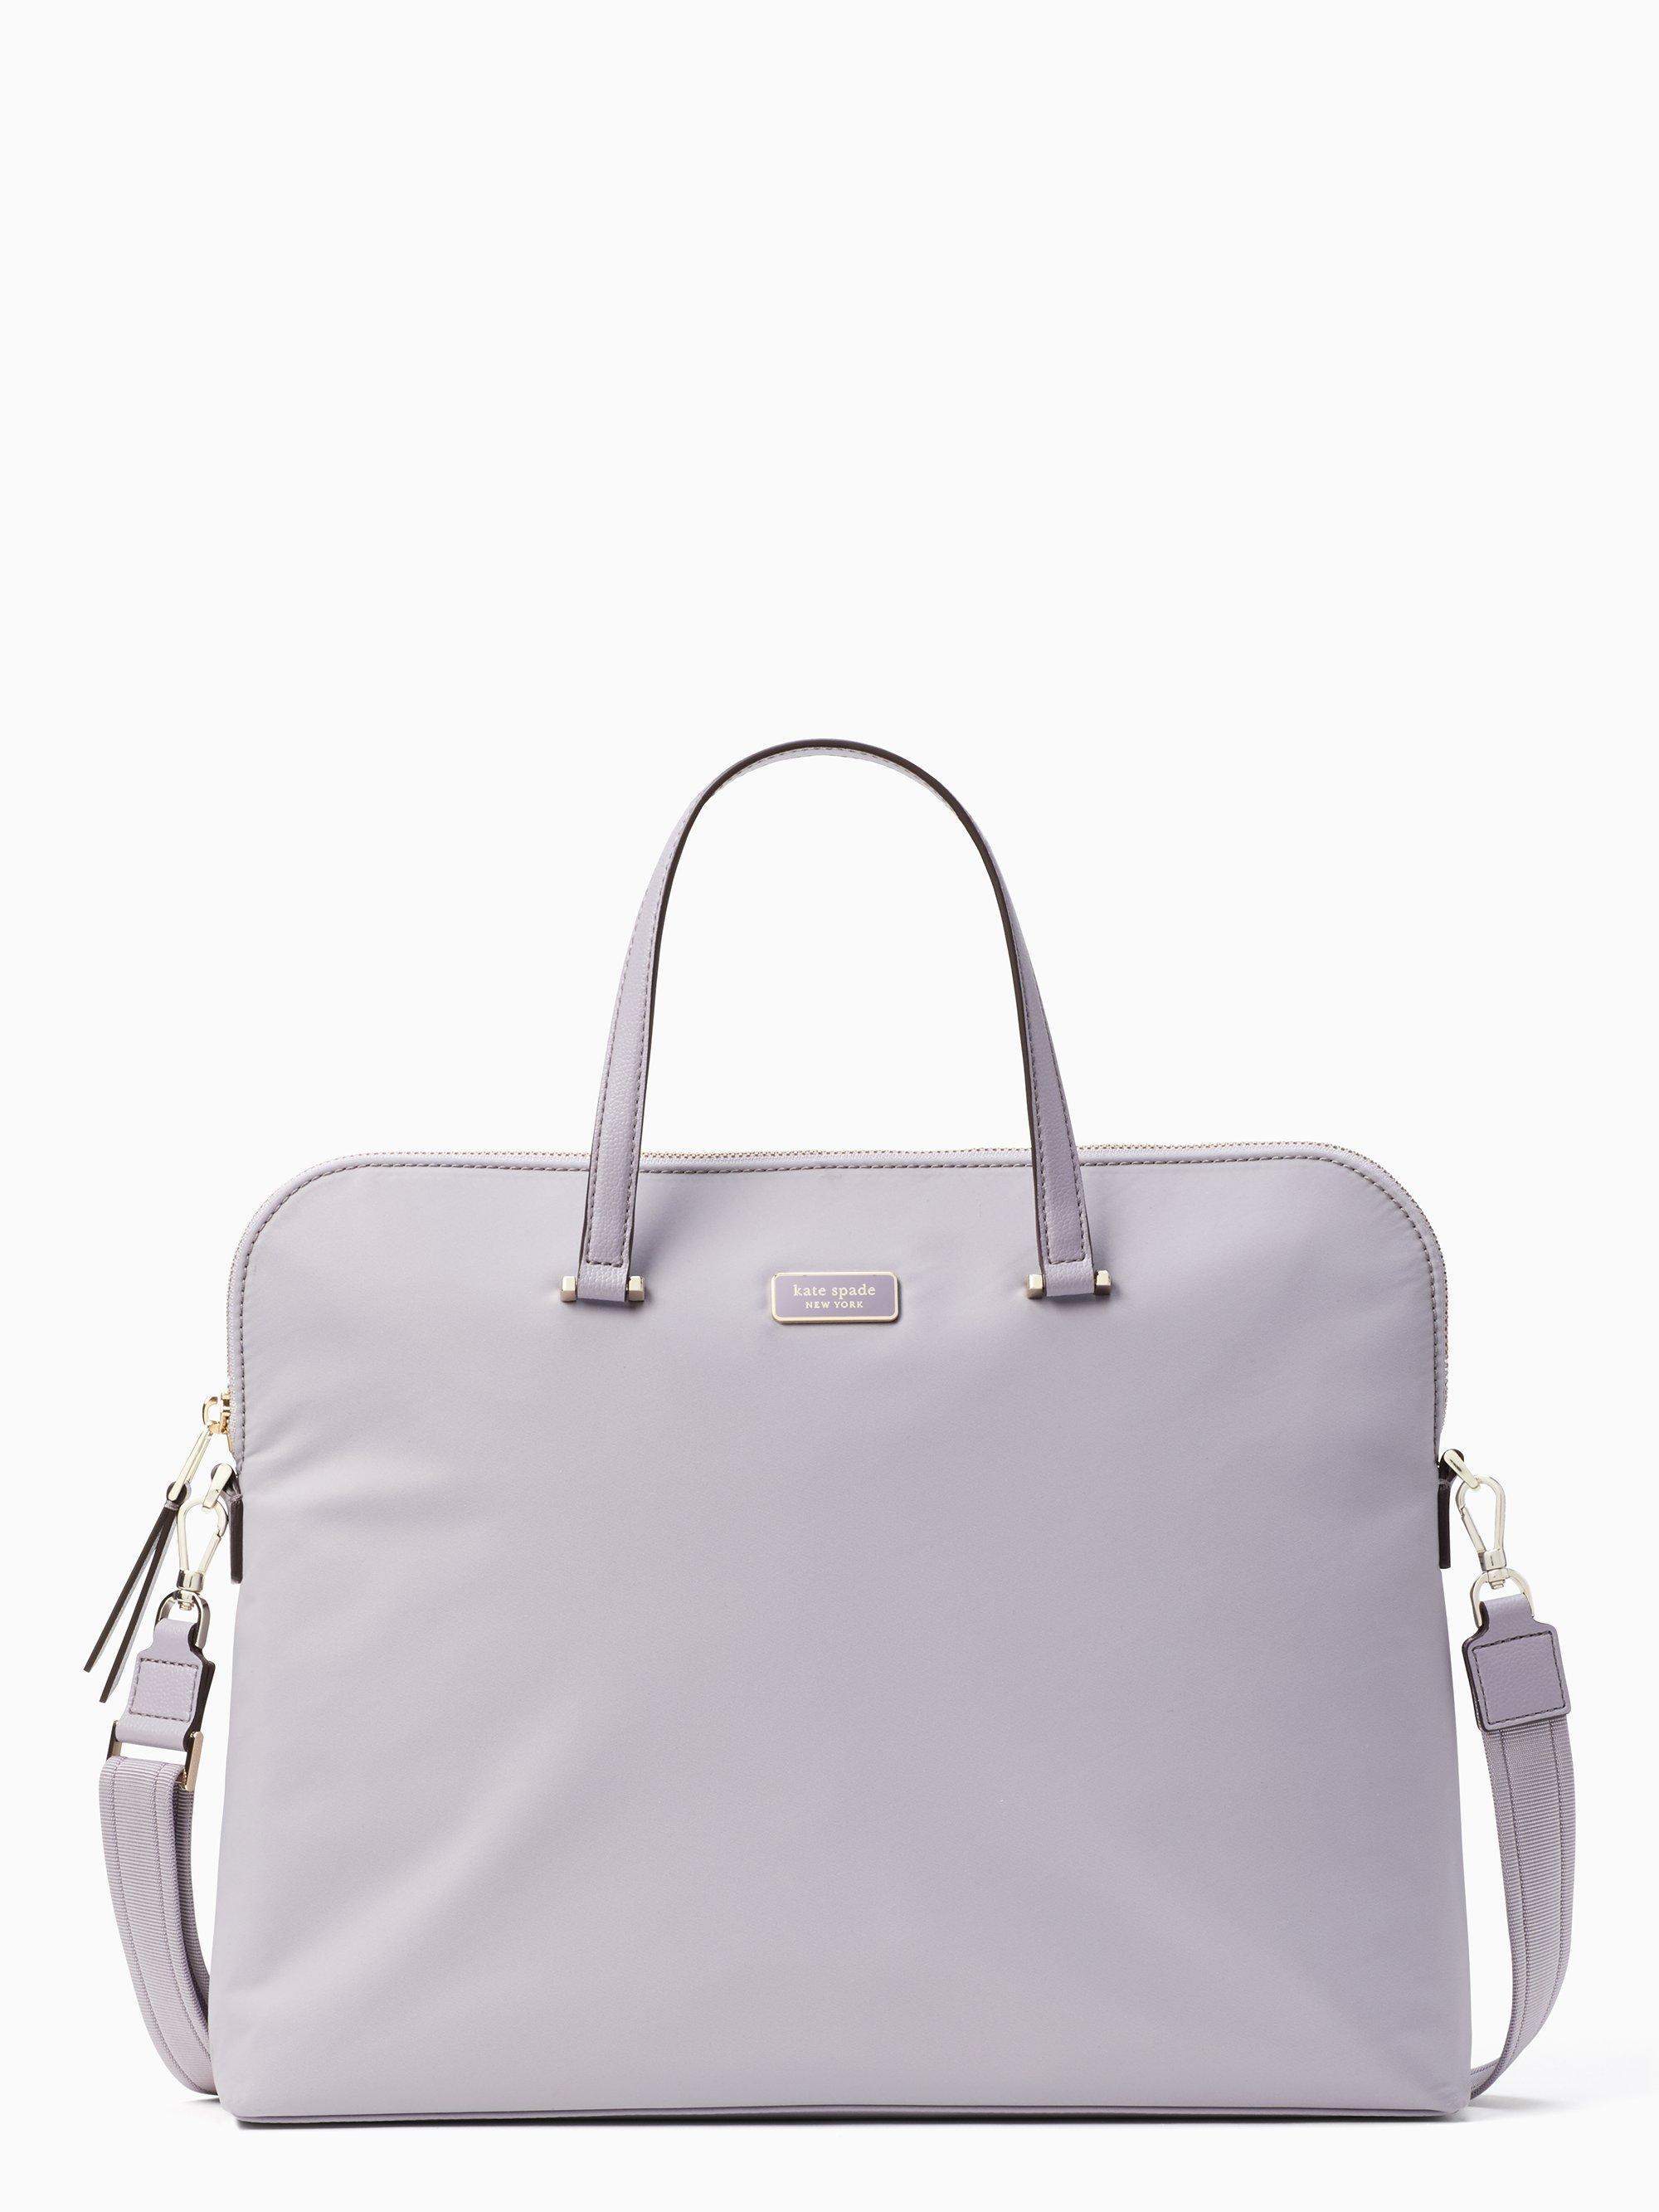 Kate Spade Laptop Handbag Clearance, 57% OFF 